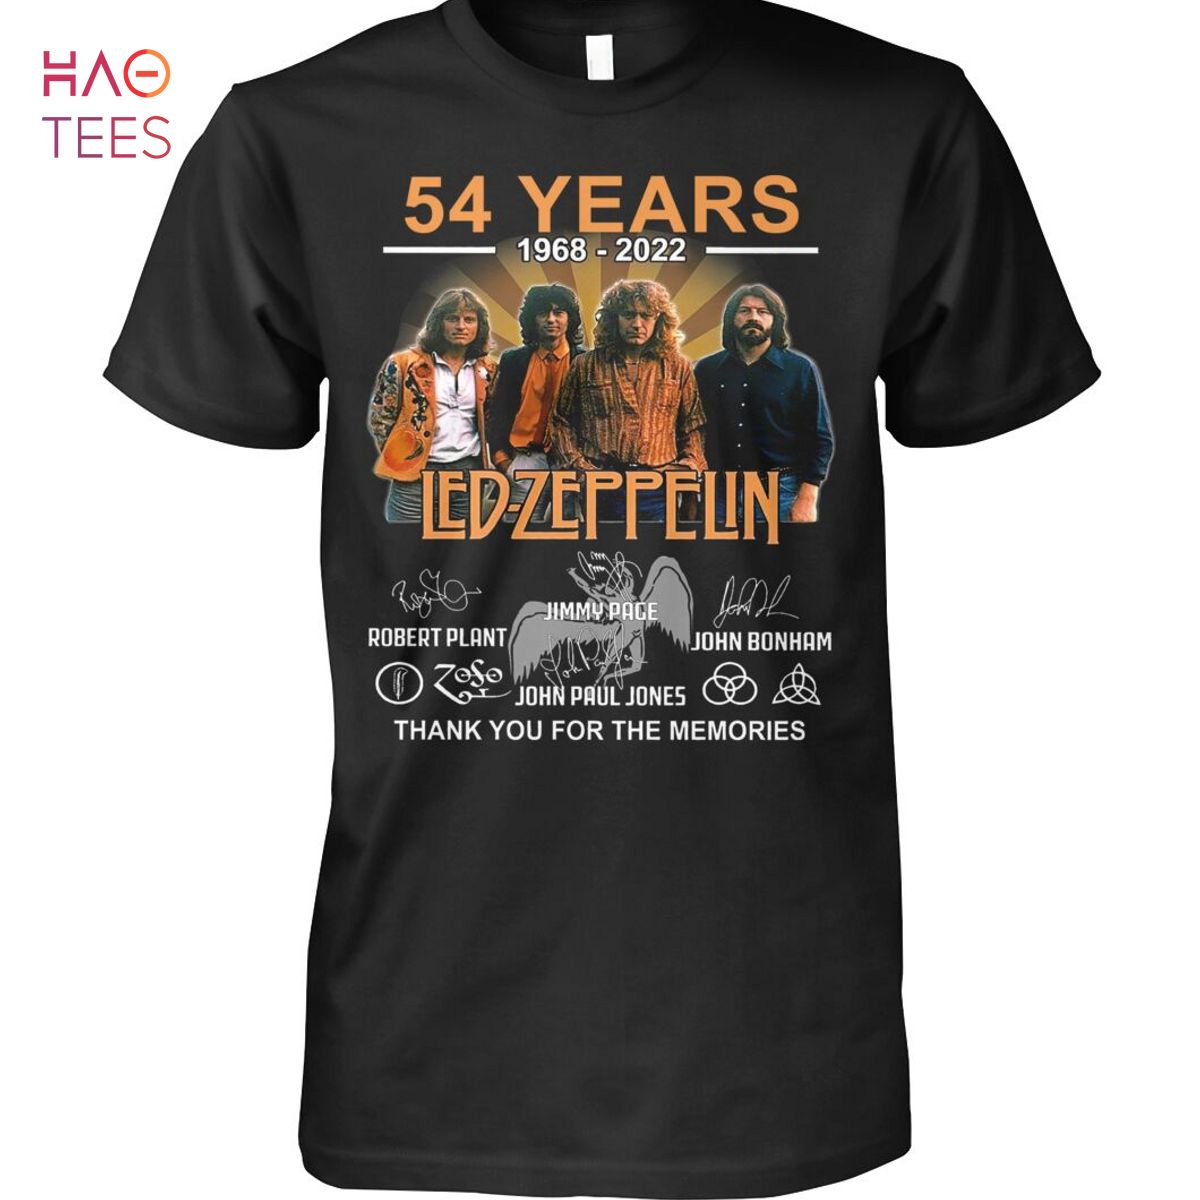 54 Years 1968-2022 Led-Zeppelin Shirt